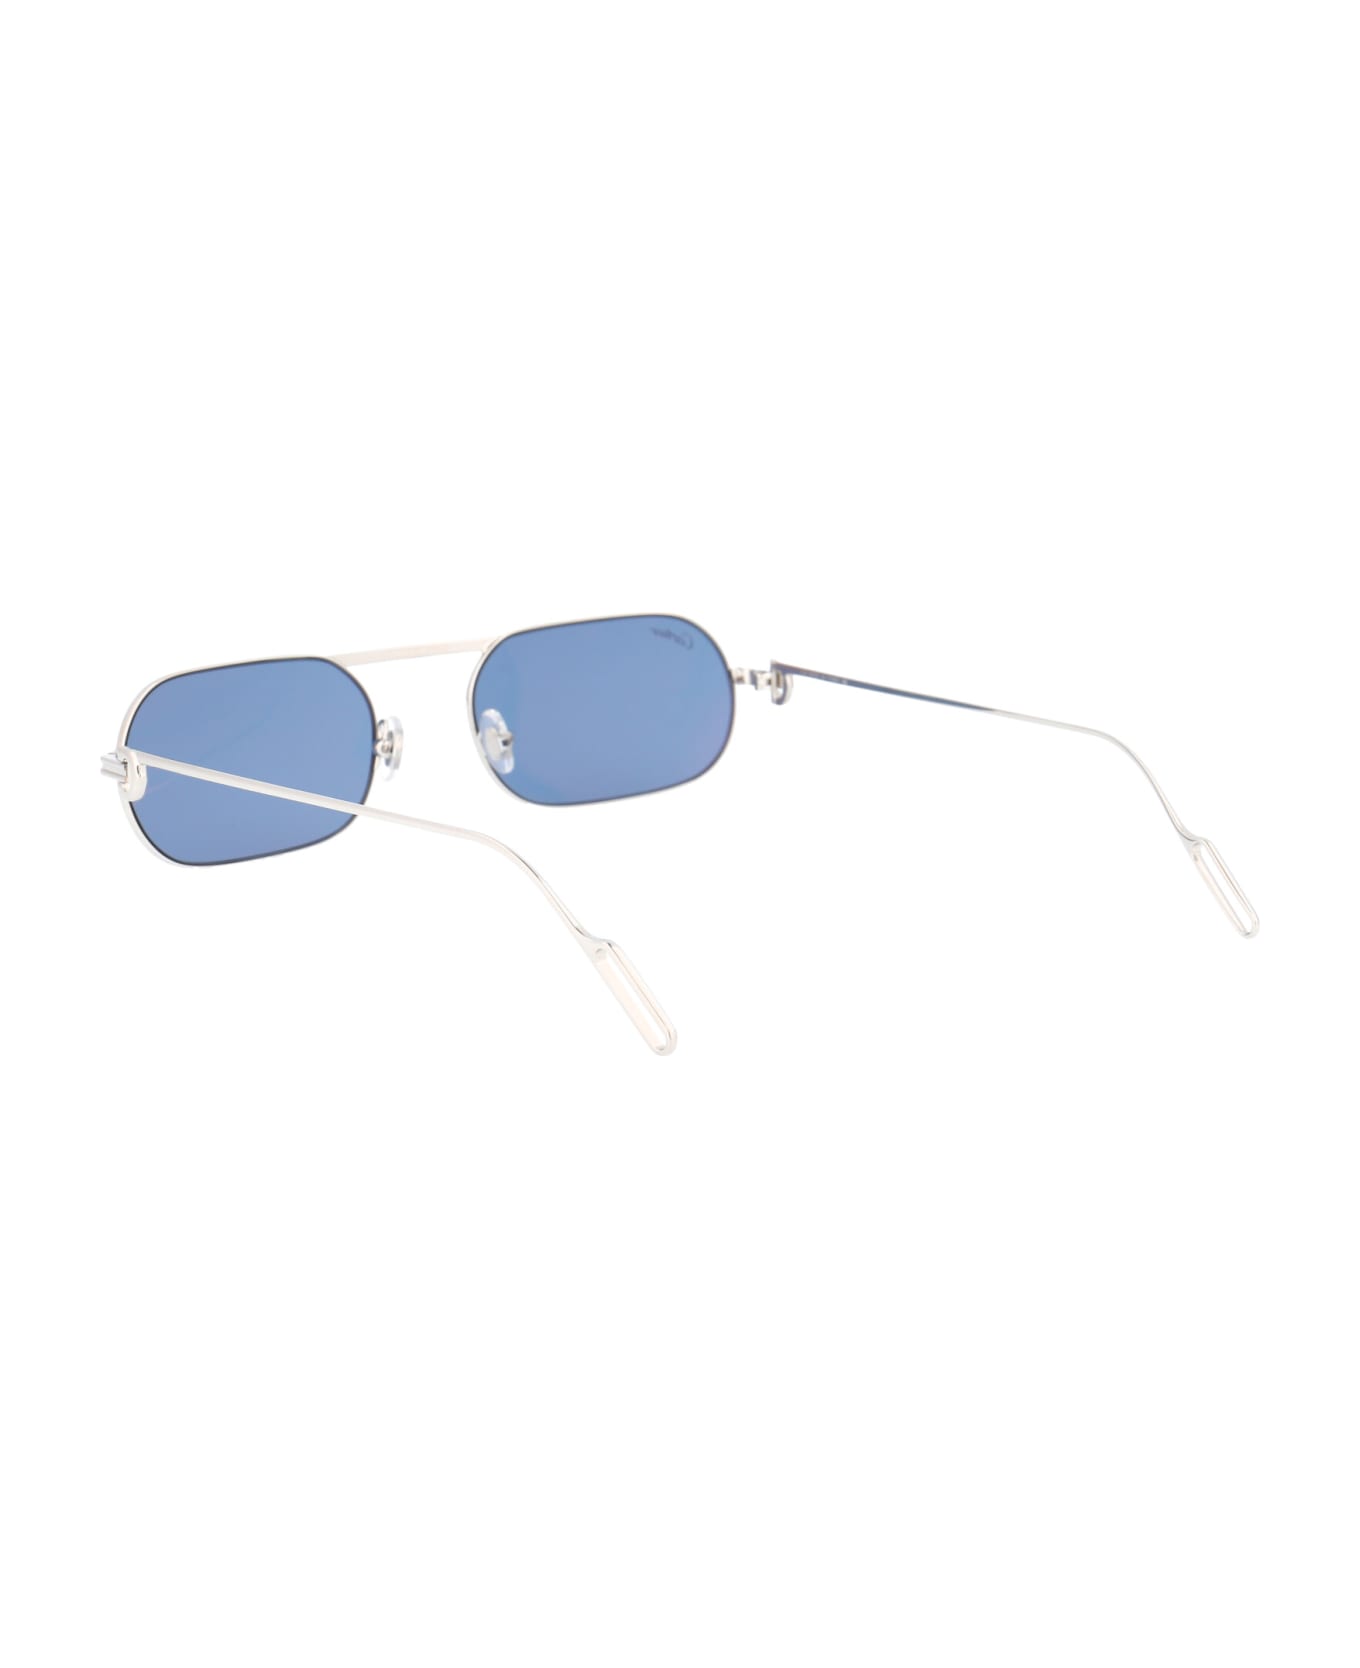 Cartier Eyewear Ct0112s Sunglasses - 002 SILVER SILVER BLUE